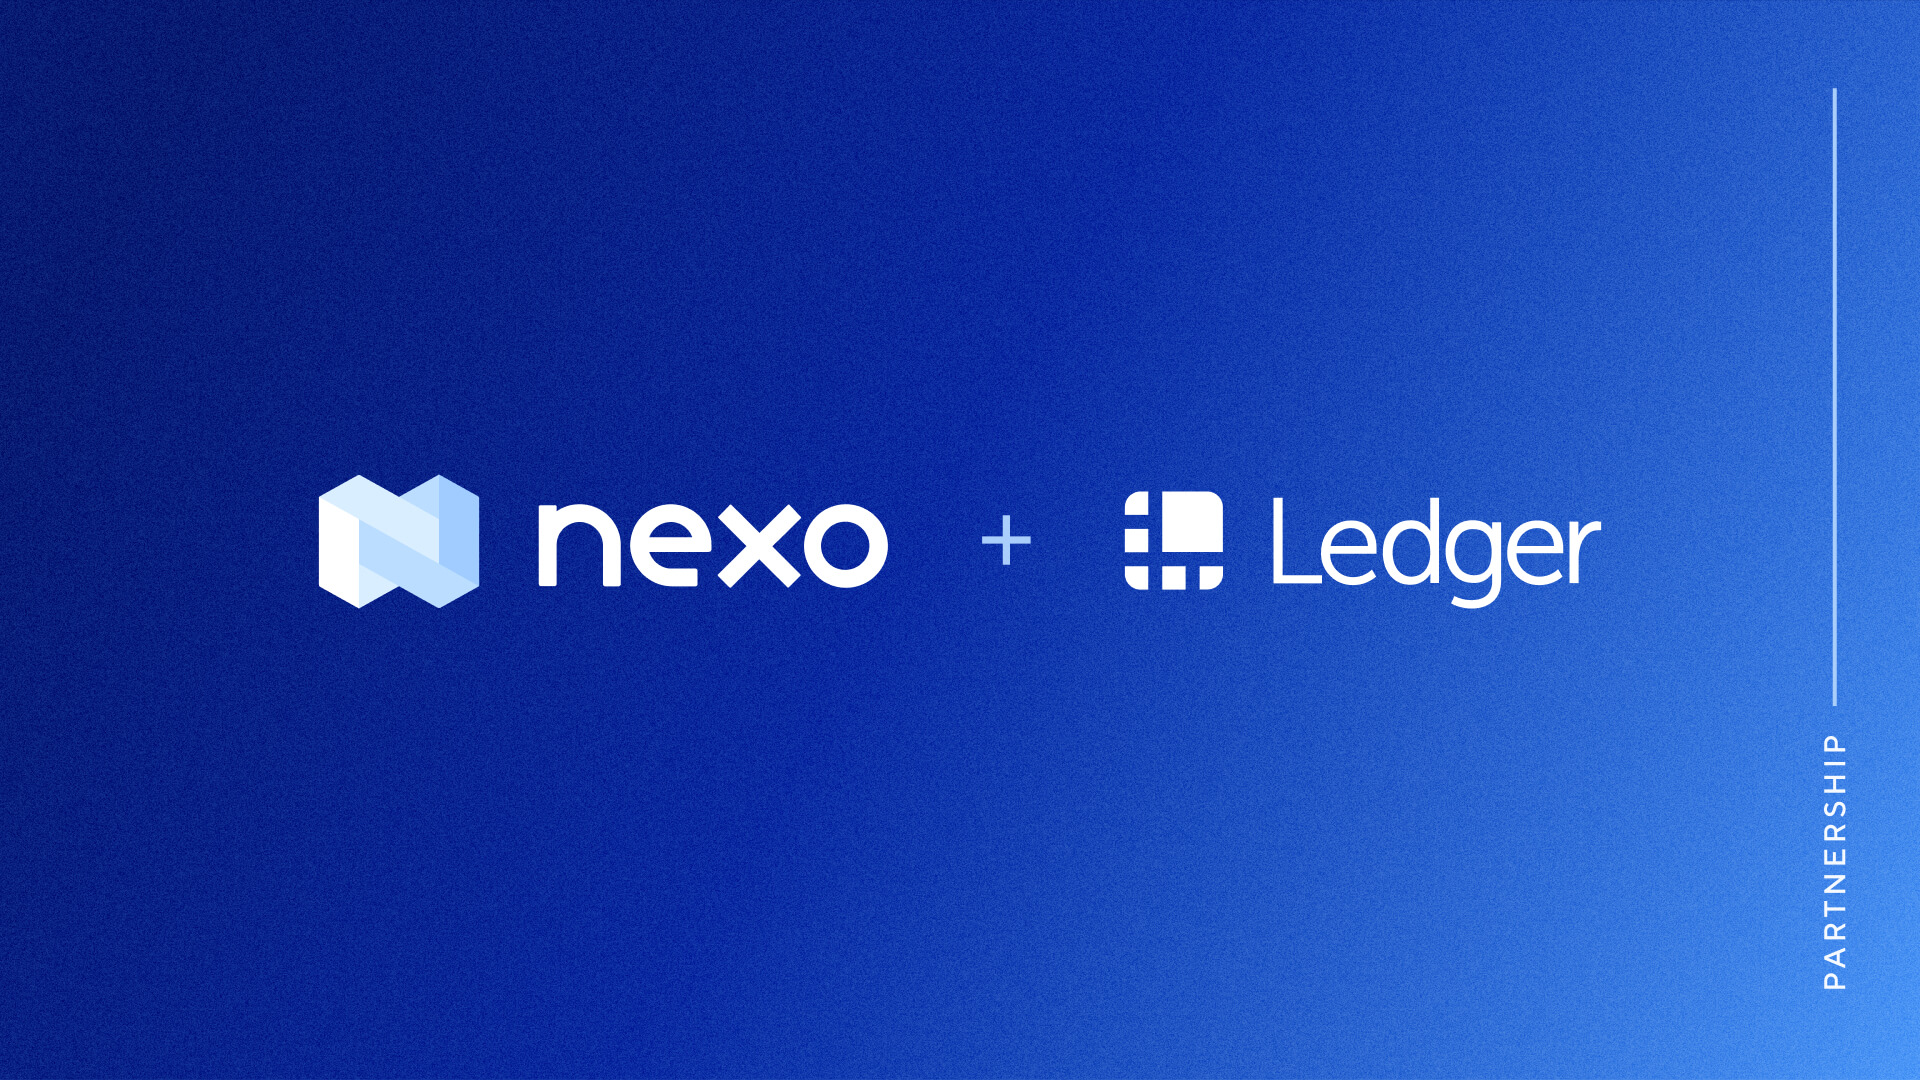 Ledger Vault社との提携により、Nexo社のセキュリティインフラは拡大しています。